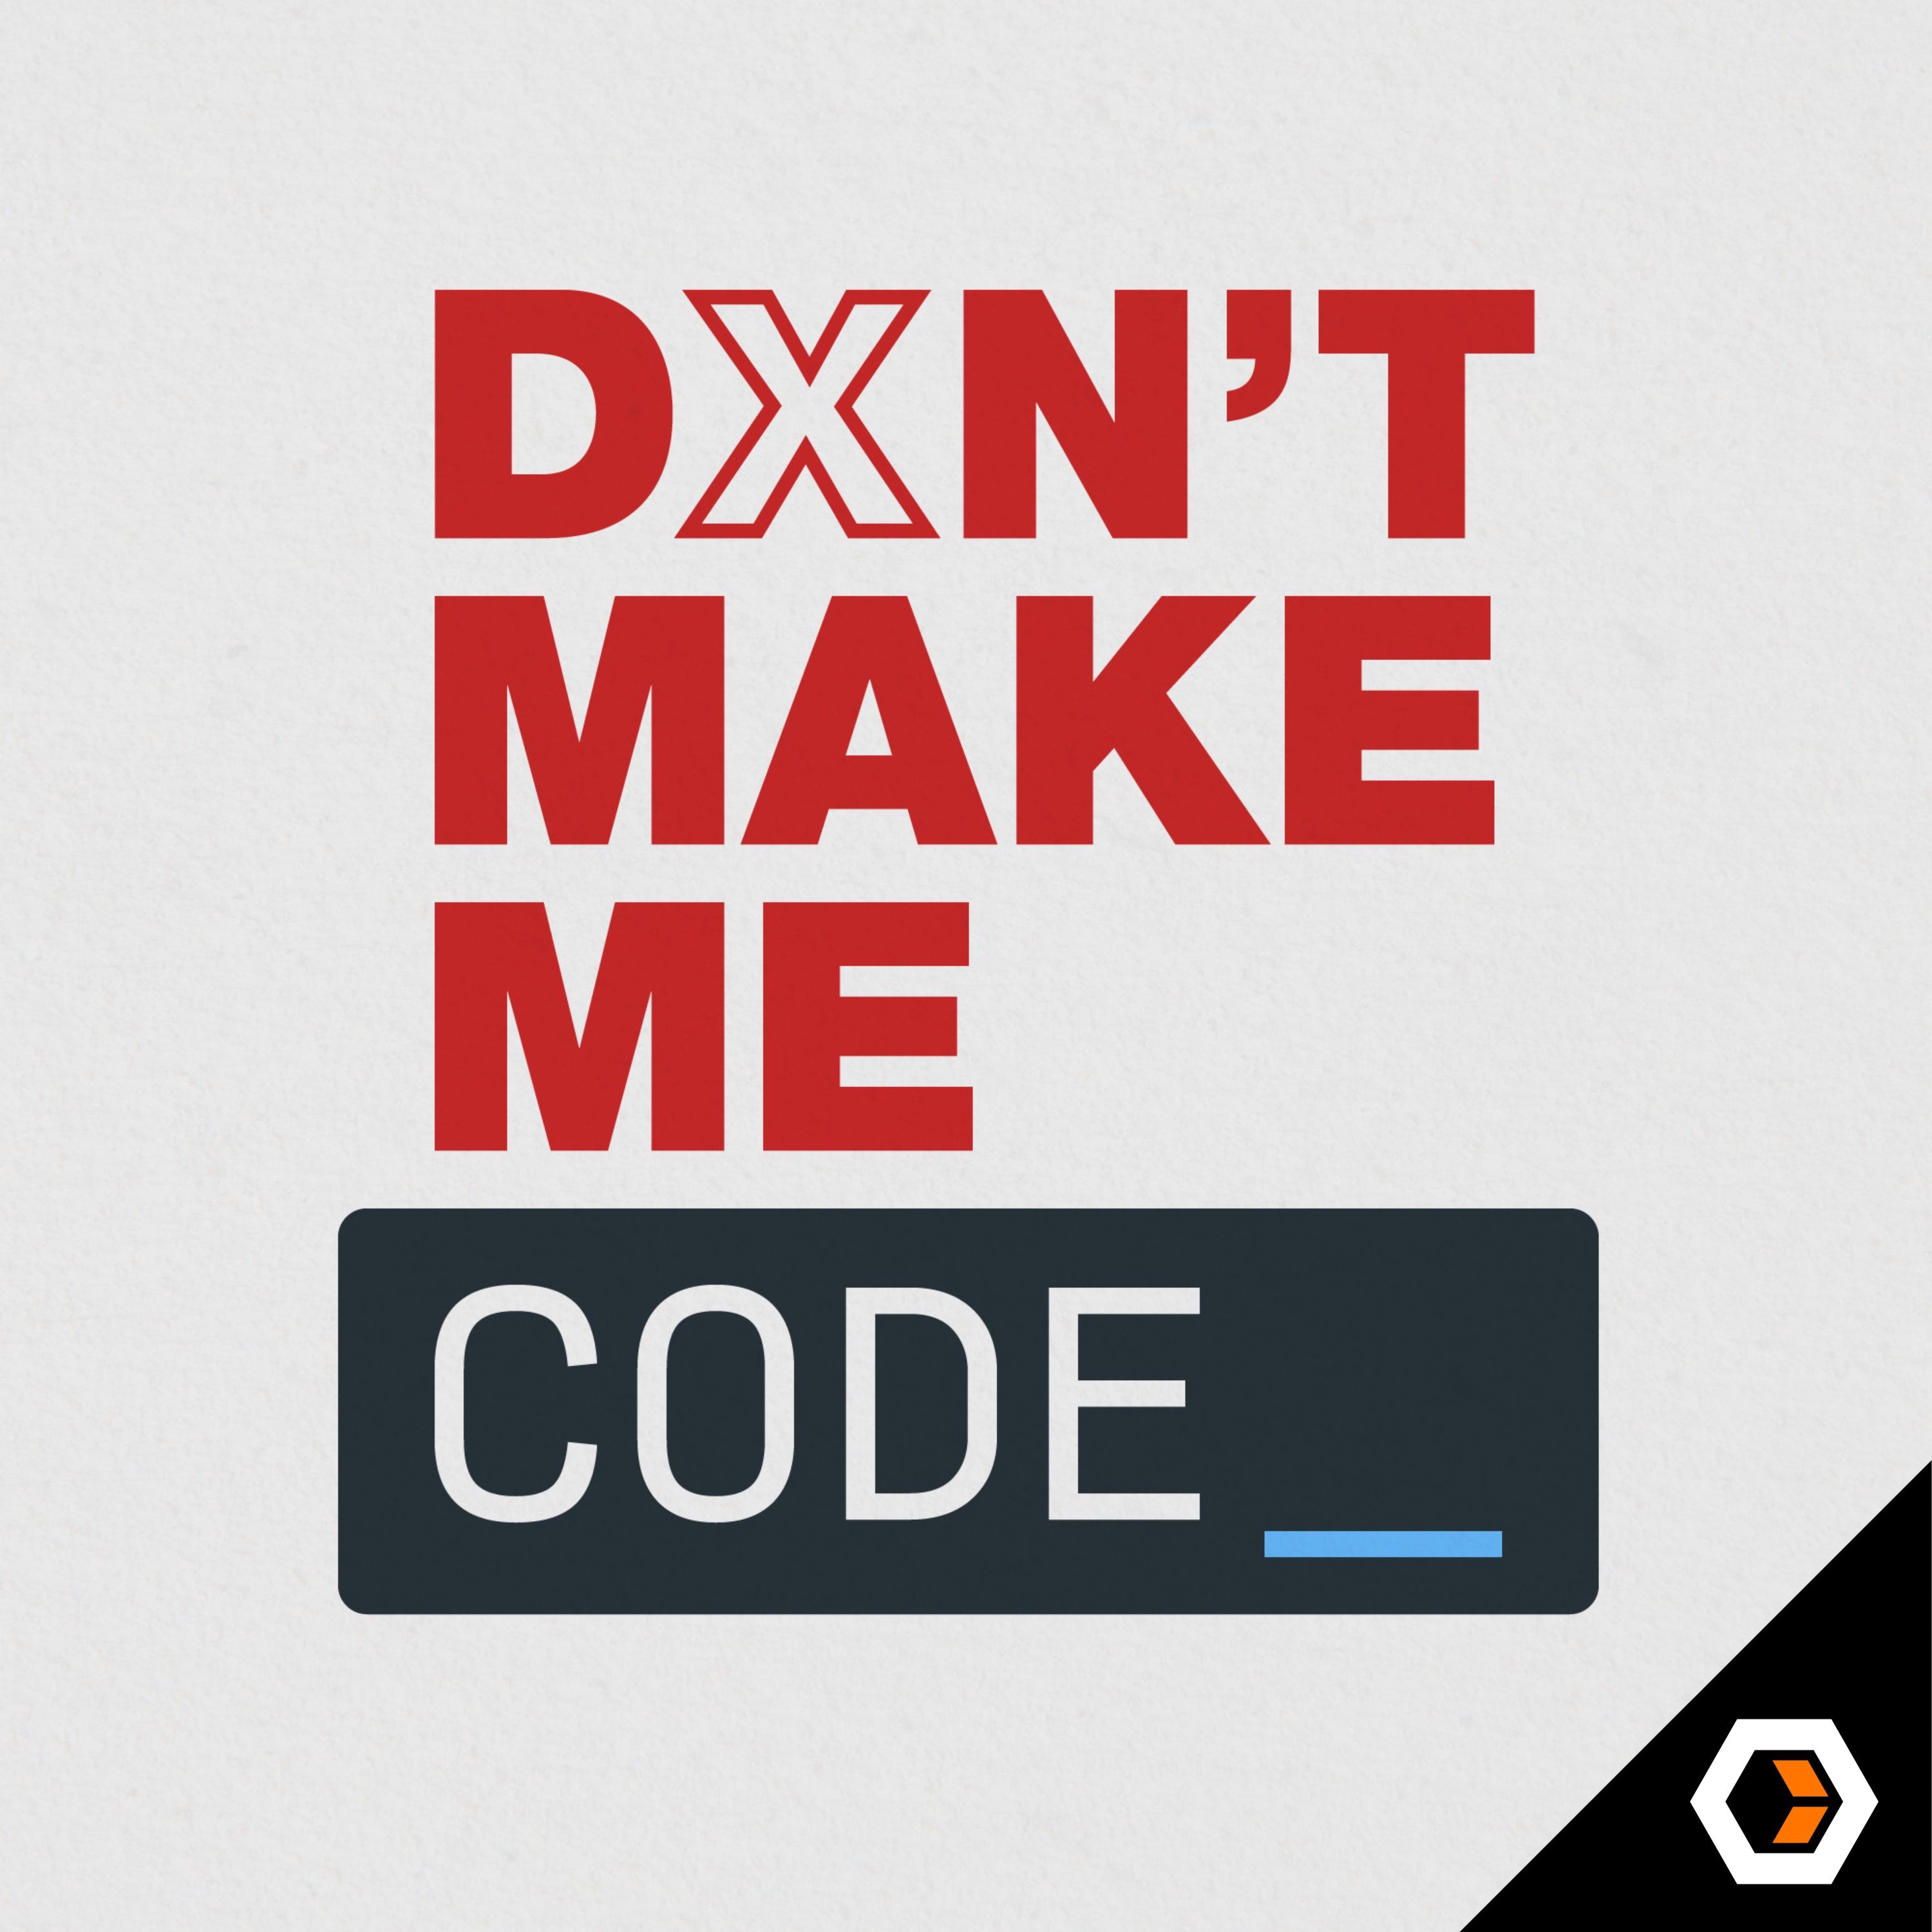 Don't Make Me Code